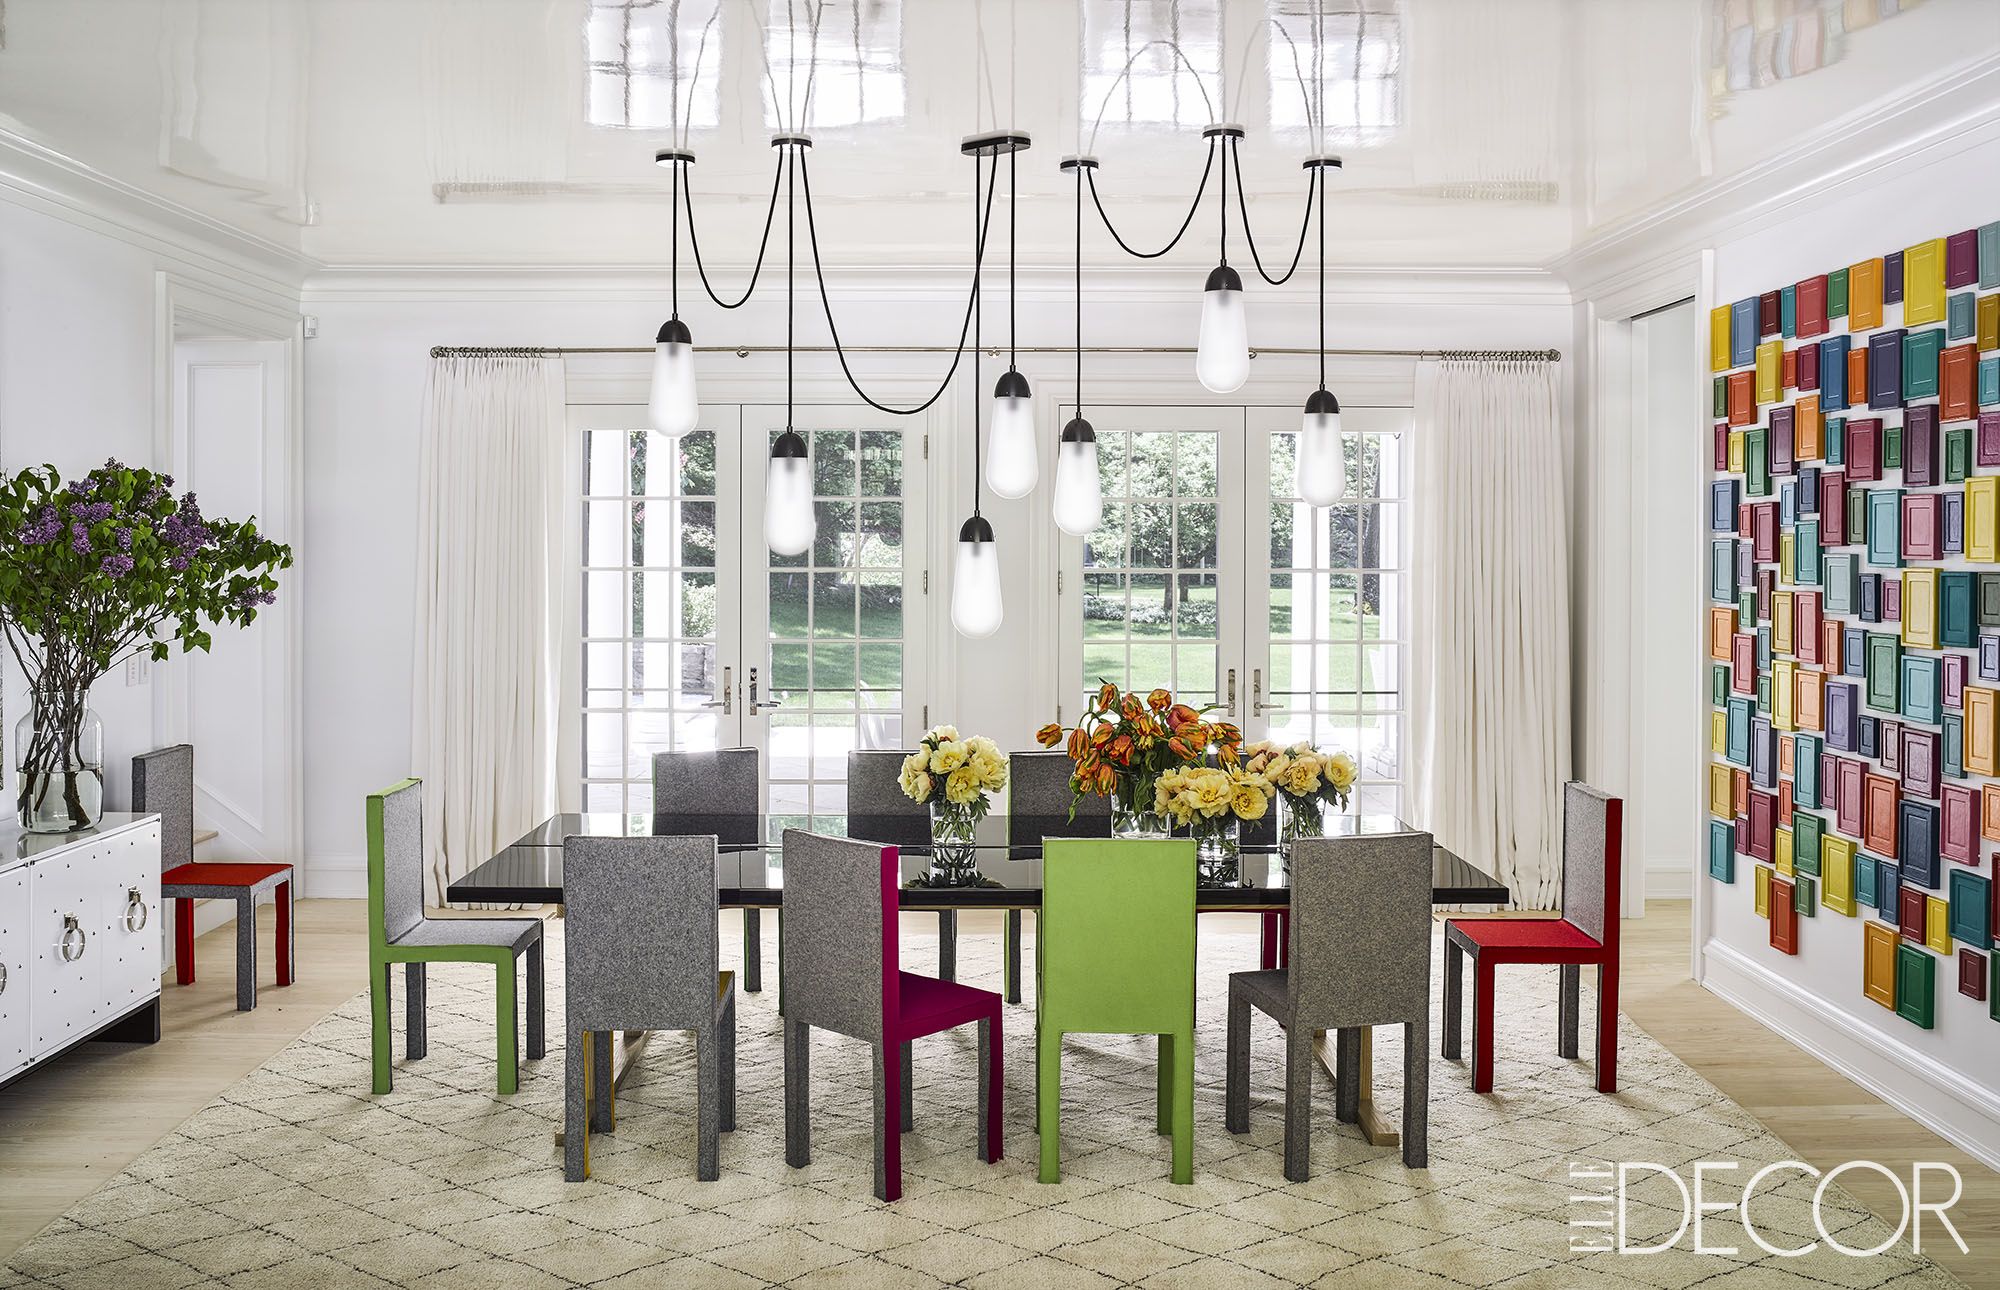 til eksil skarpt have tillid 30+ Best Dining Room Light Fixtures - Chandelier & Pendant Lighting for Dining  Room Ceilings